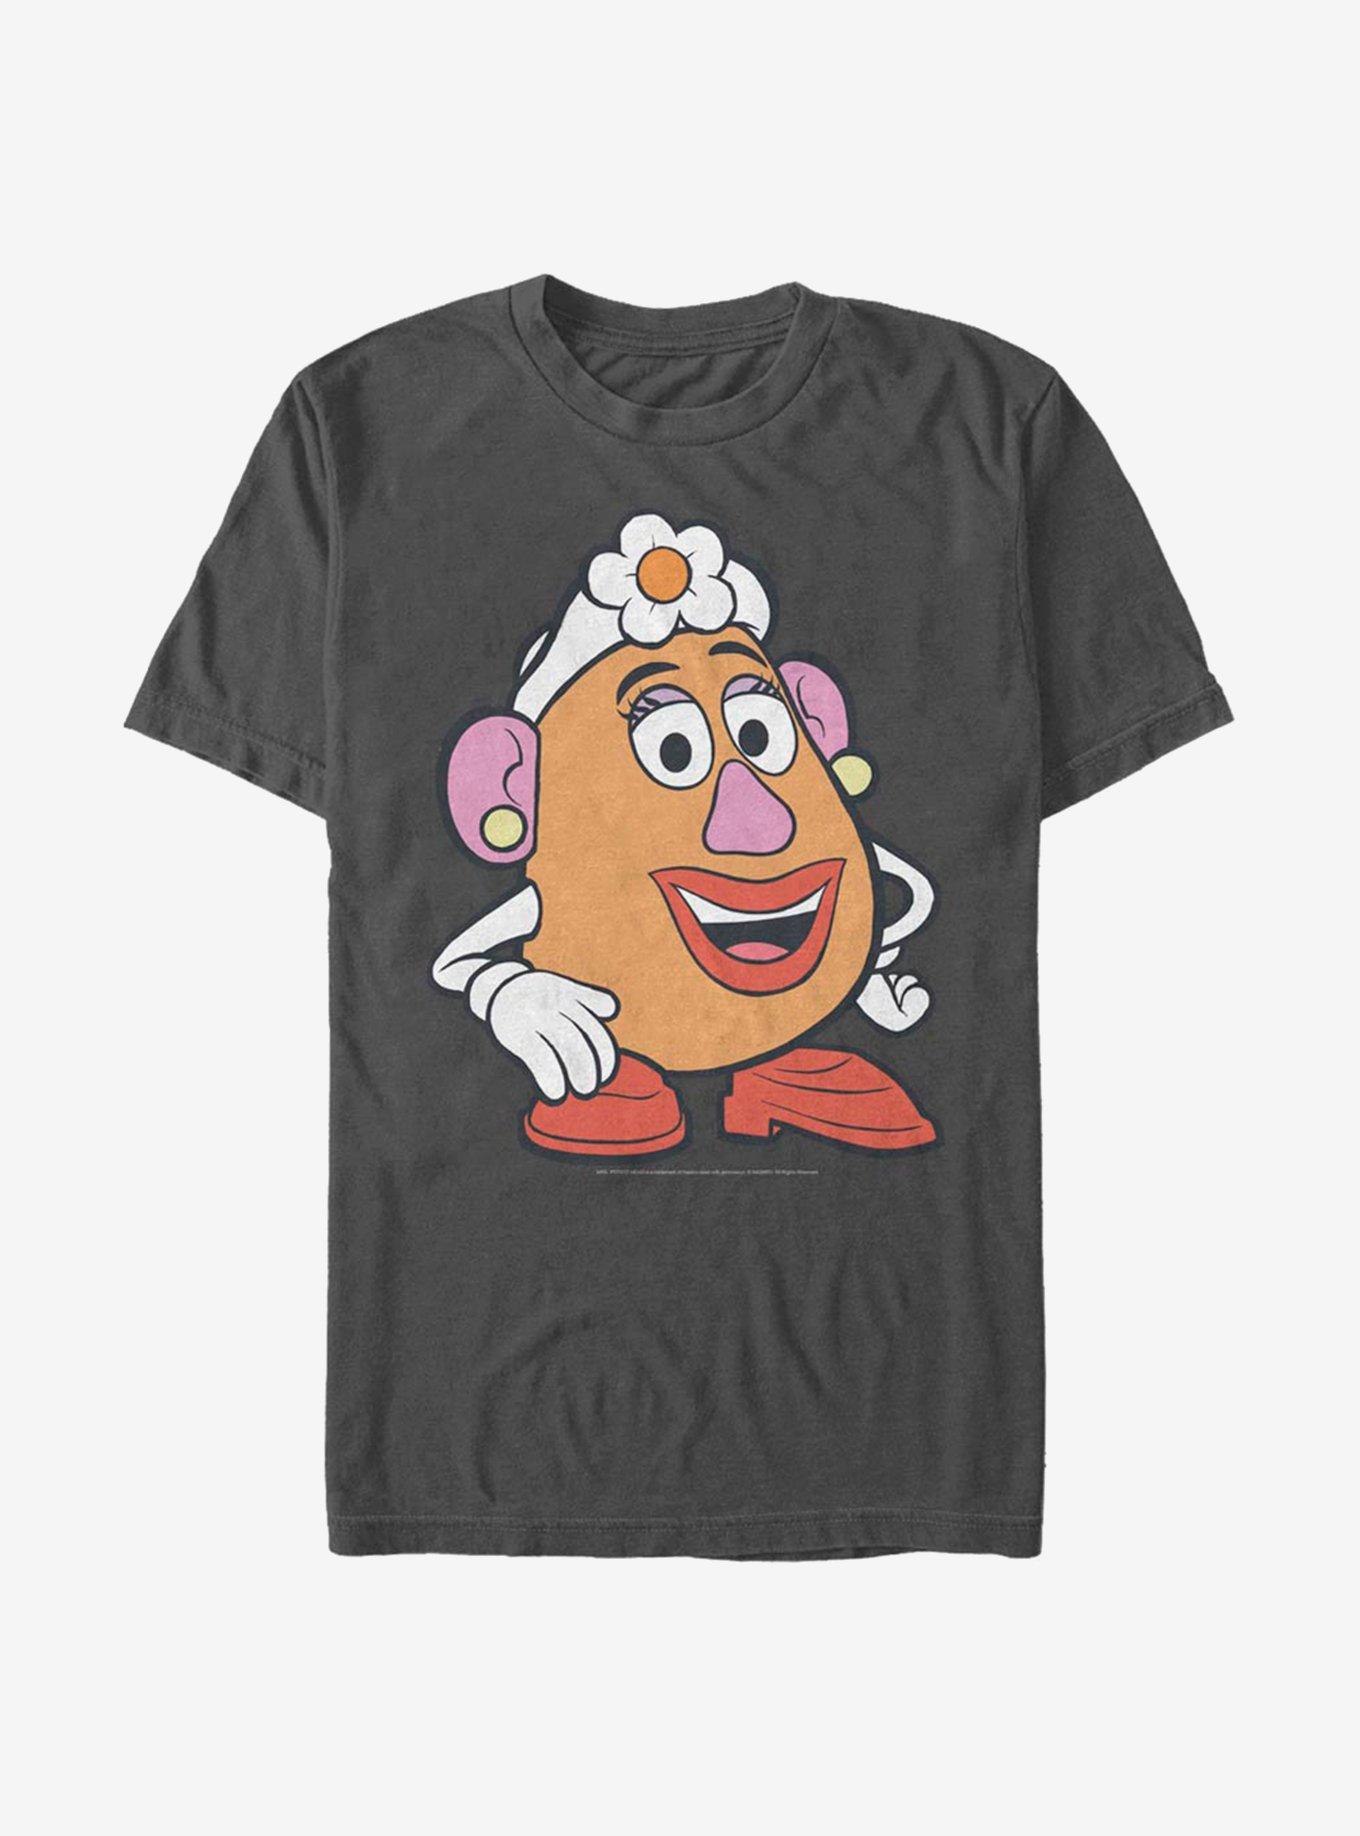 Disney Pixar Toy Story 4 Mrs. Potato Big Face T-Shirt, CHARCOAL, hi-res